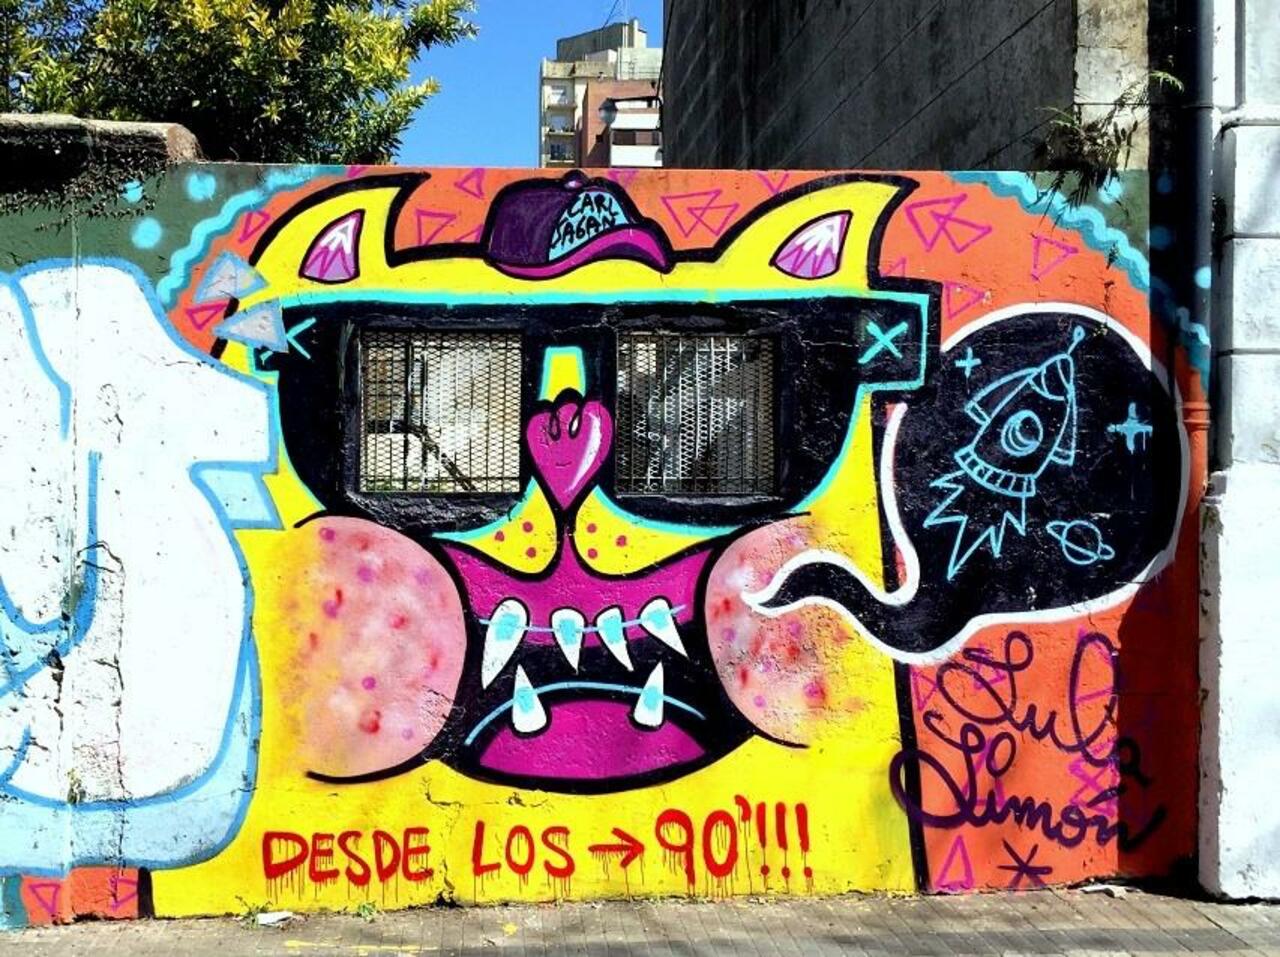 #Graffiti de hoy: << Desde los ‘90 !! >> calle 9, 47y48 #LaPlata #Argentina #StreetArt #UrbanArt #ArteUrbano http://t.co/UpOaHLjPg3